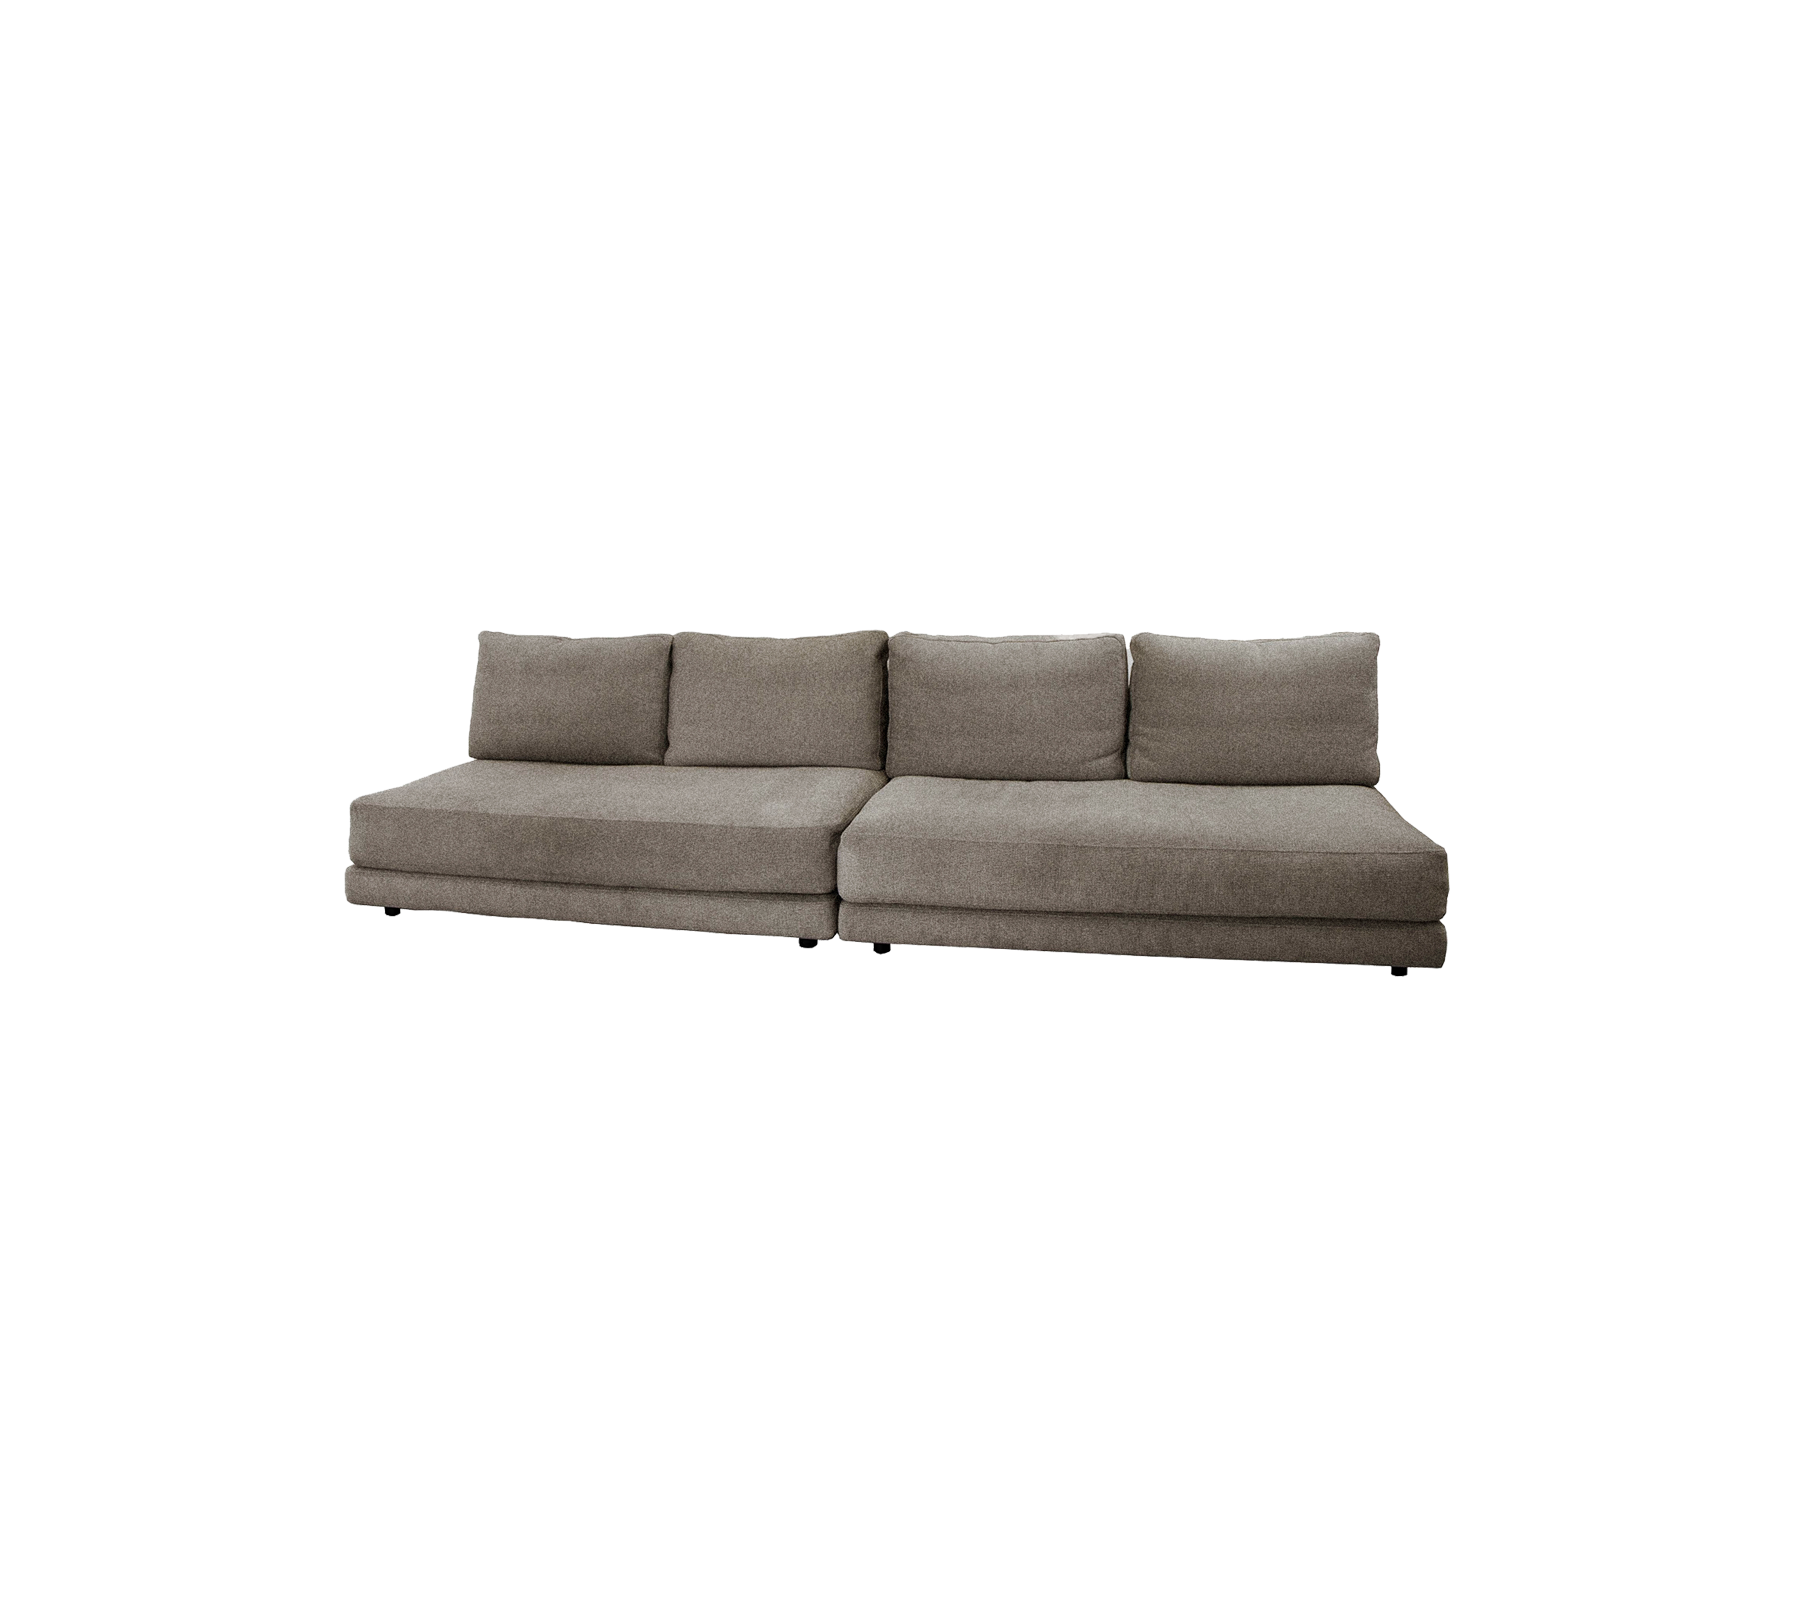 Scale Cane-line Wool, Fire Retardant (Crib 5), 2 x 2-seater sofa (6.1)